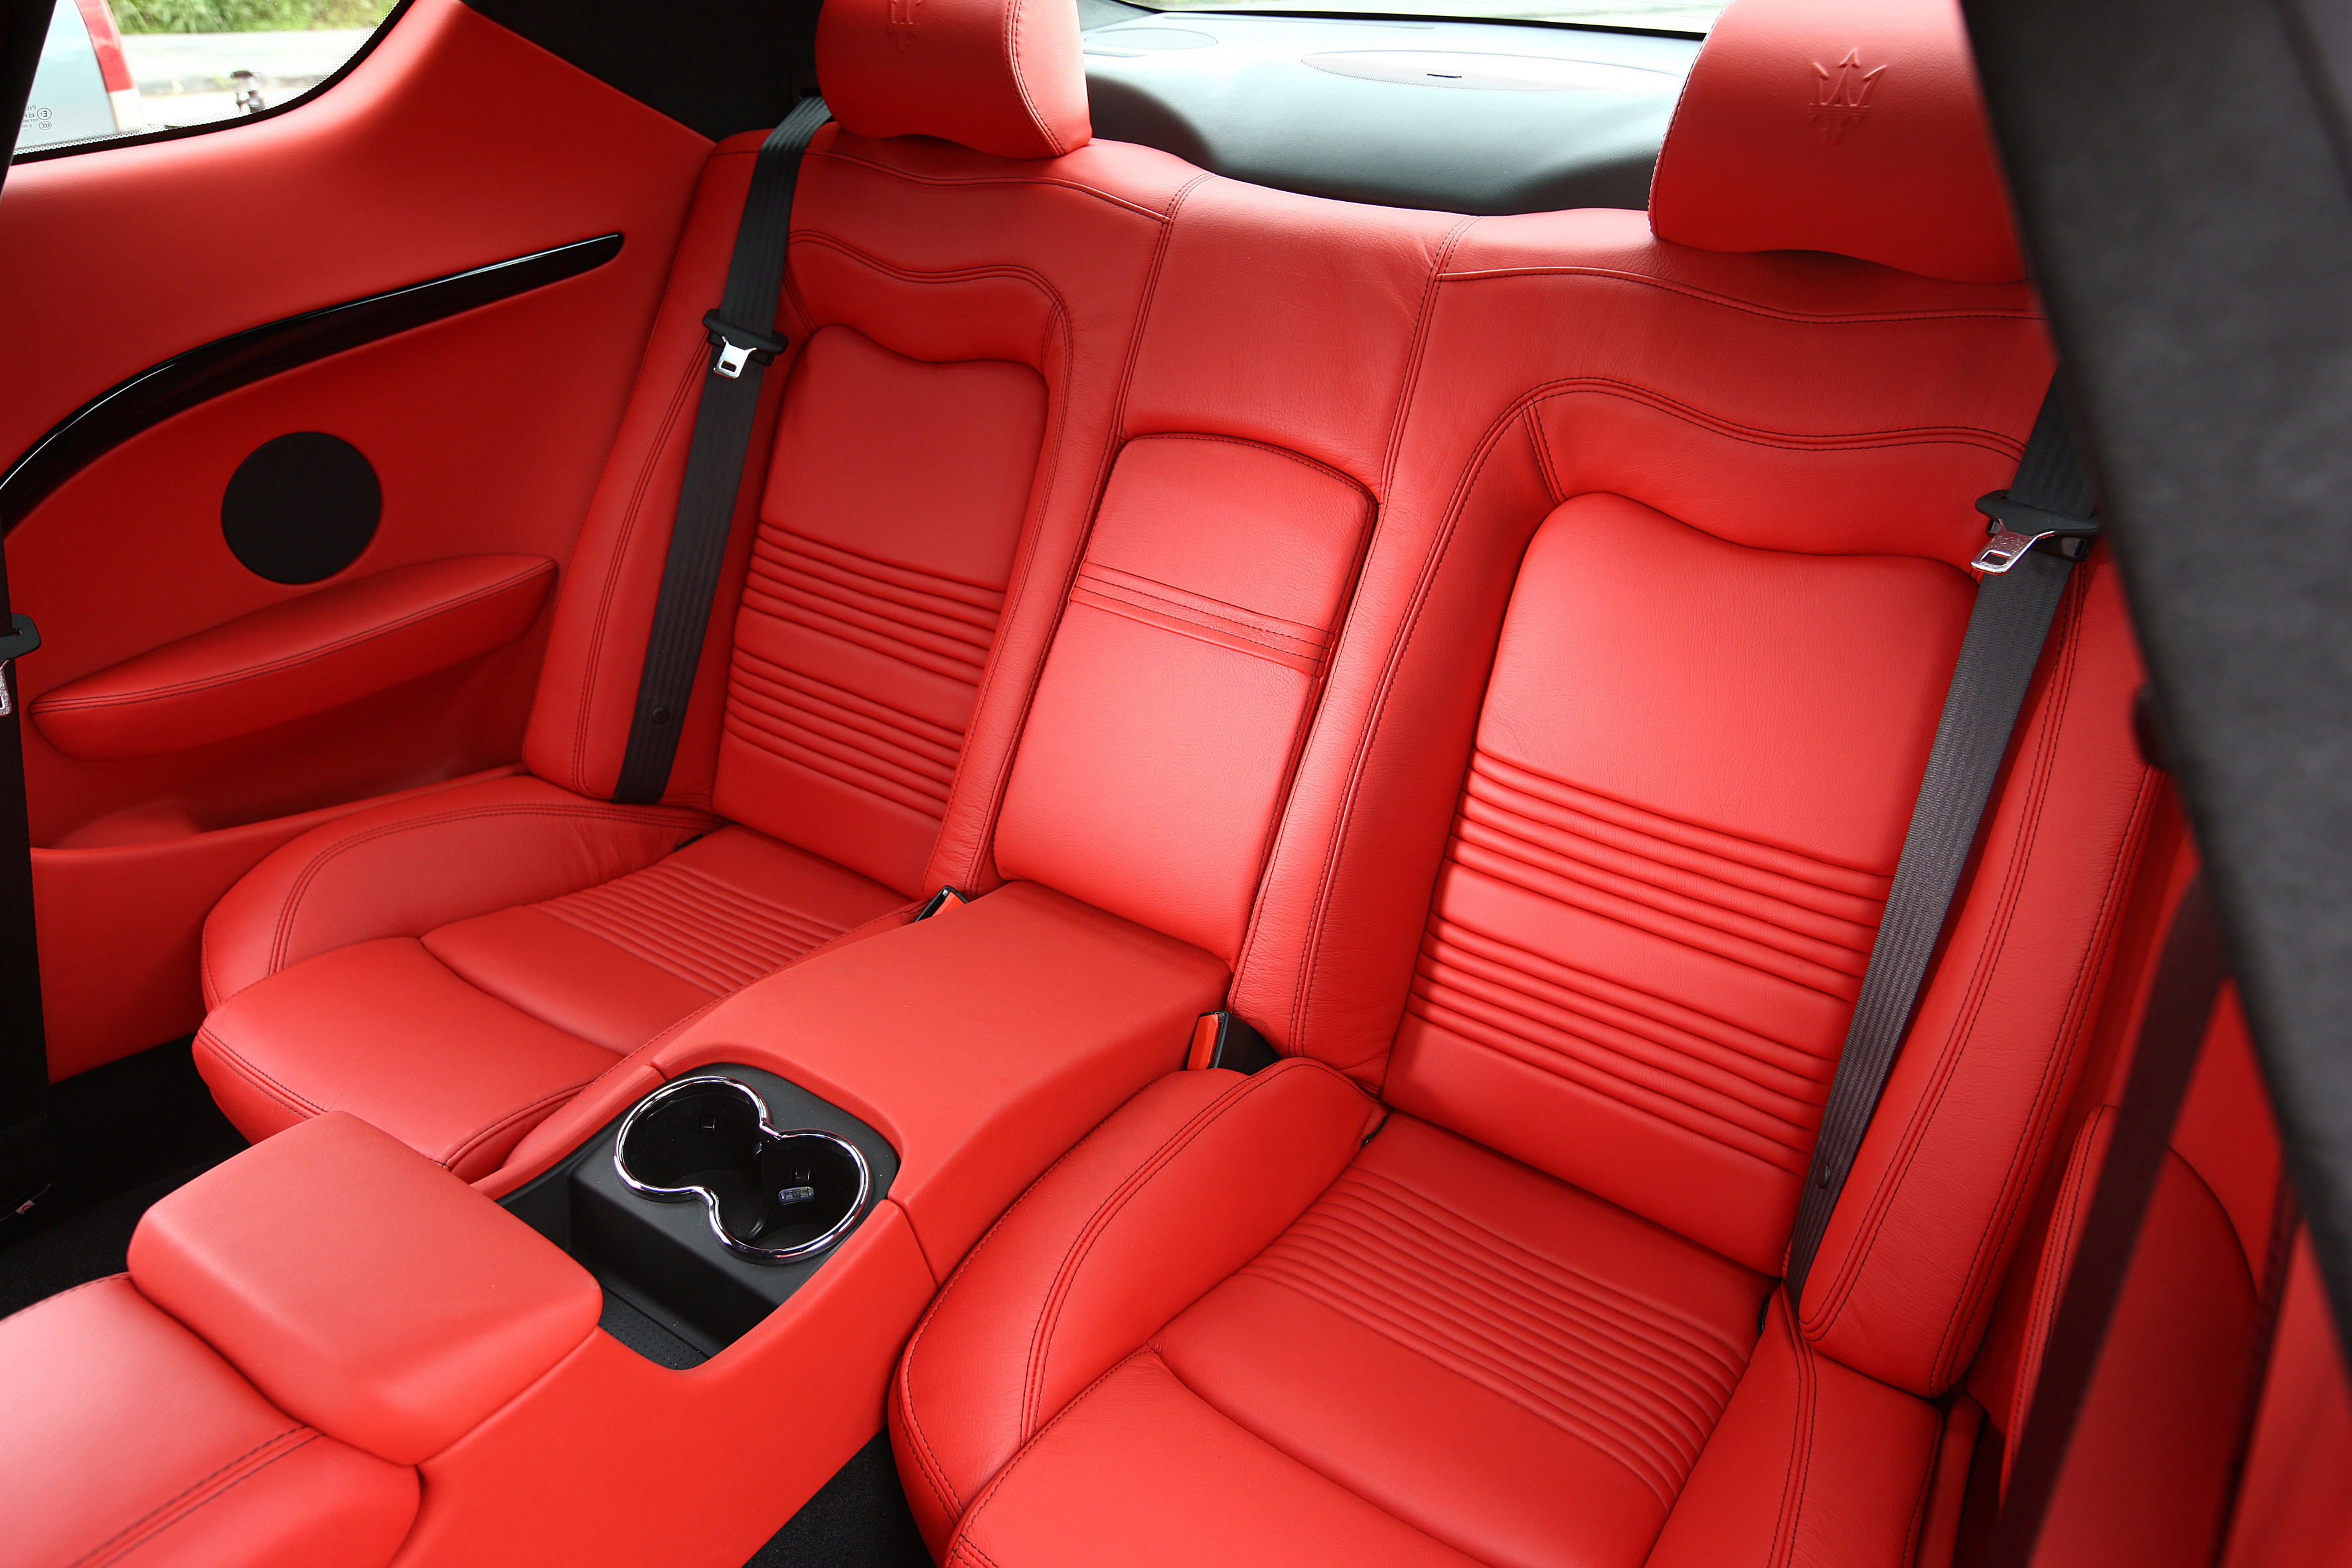 Maserati, vehicles, car interiors - desktop wallpaper